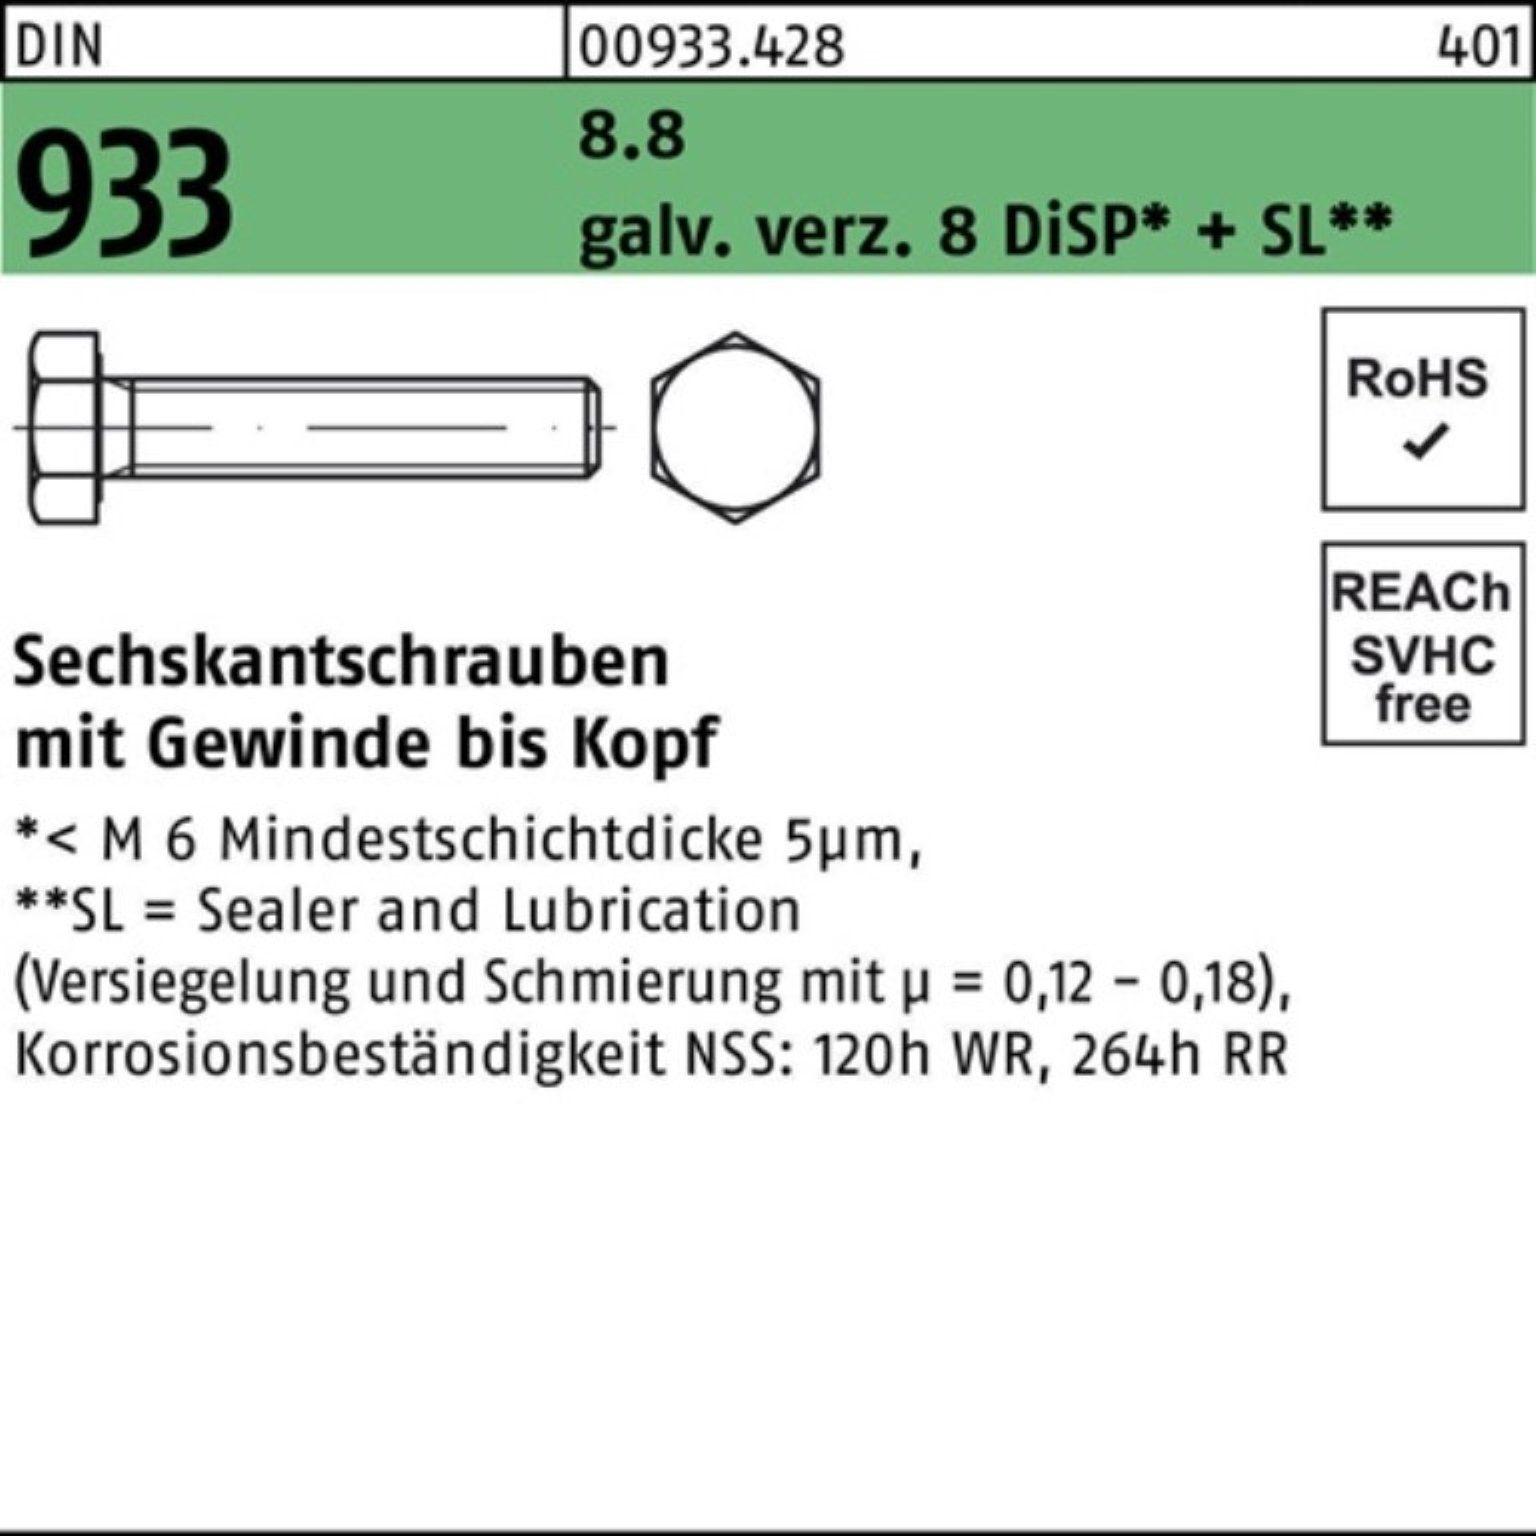 Reyher Sechskantschraube 100er Pack Sechskantschraube DIN 933 VG M20x 40 8.8 gal Zn 8 DiSP + SL